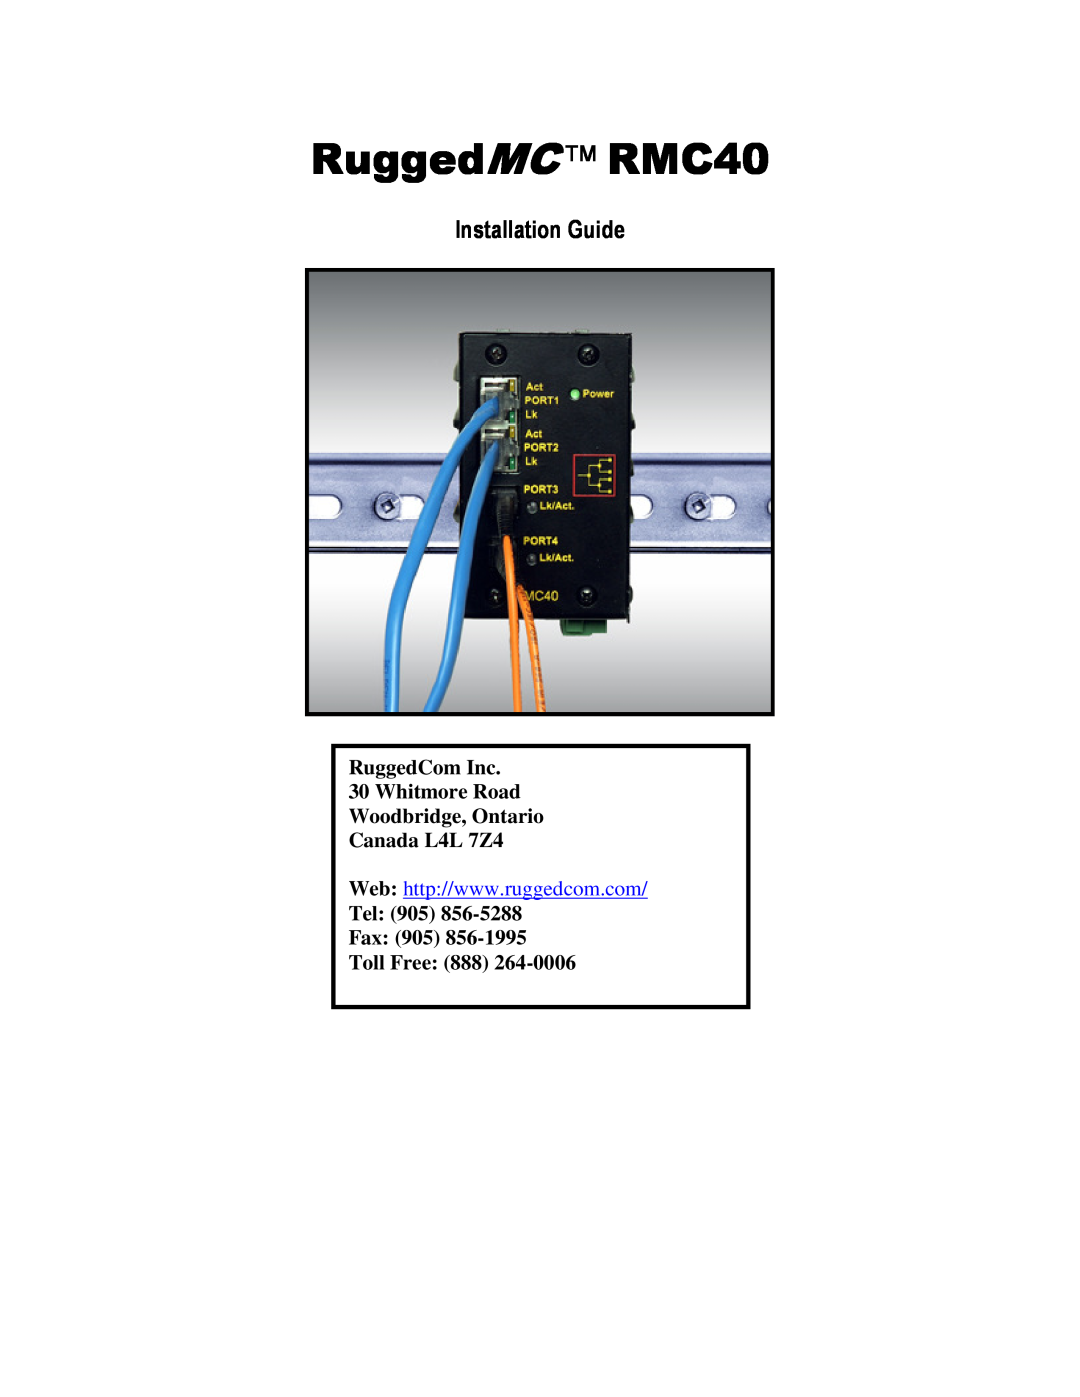 RuggedCom manual Installation Guide, RuggedMC  RMC40, RuggedCom Inc 30 Whitmore Road, Tel: 905 Fax: 905 Toll Free: 888 